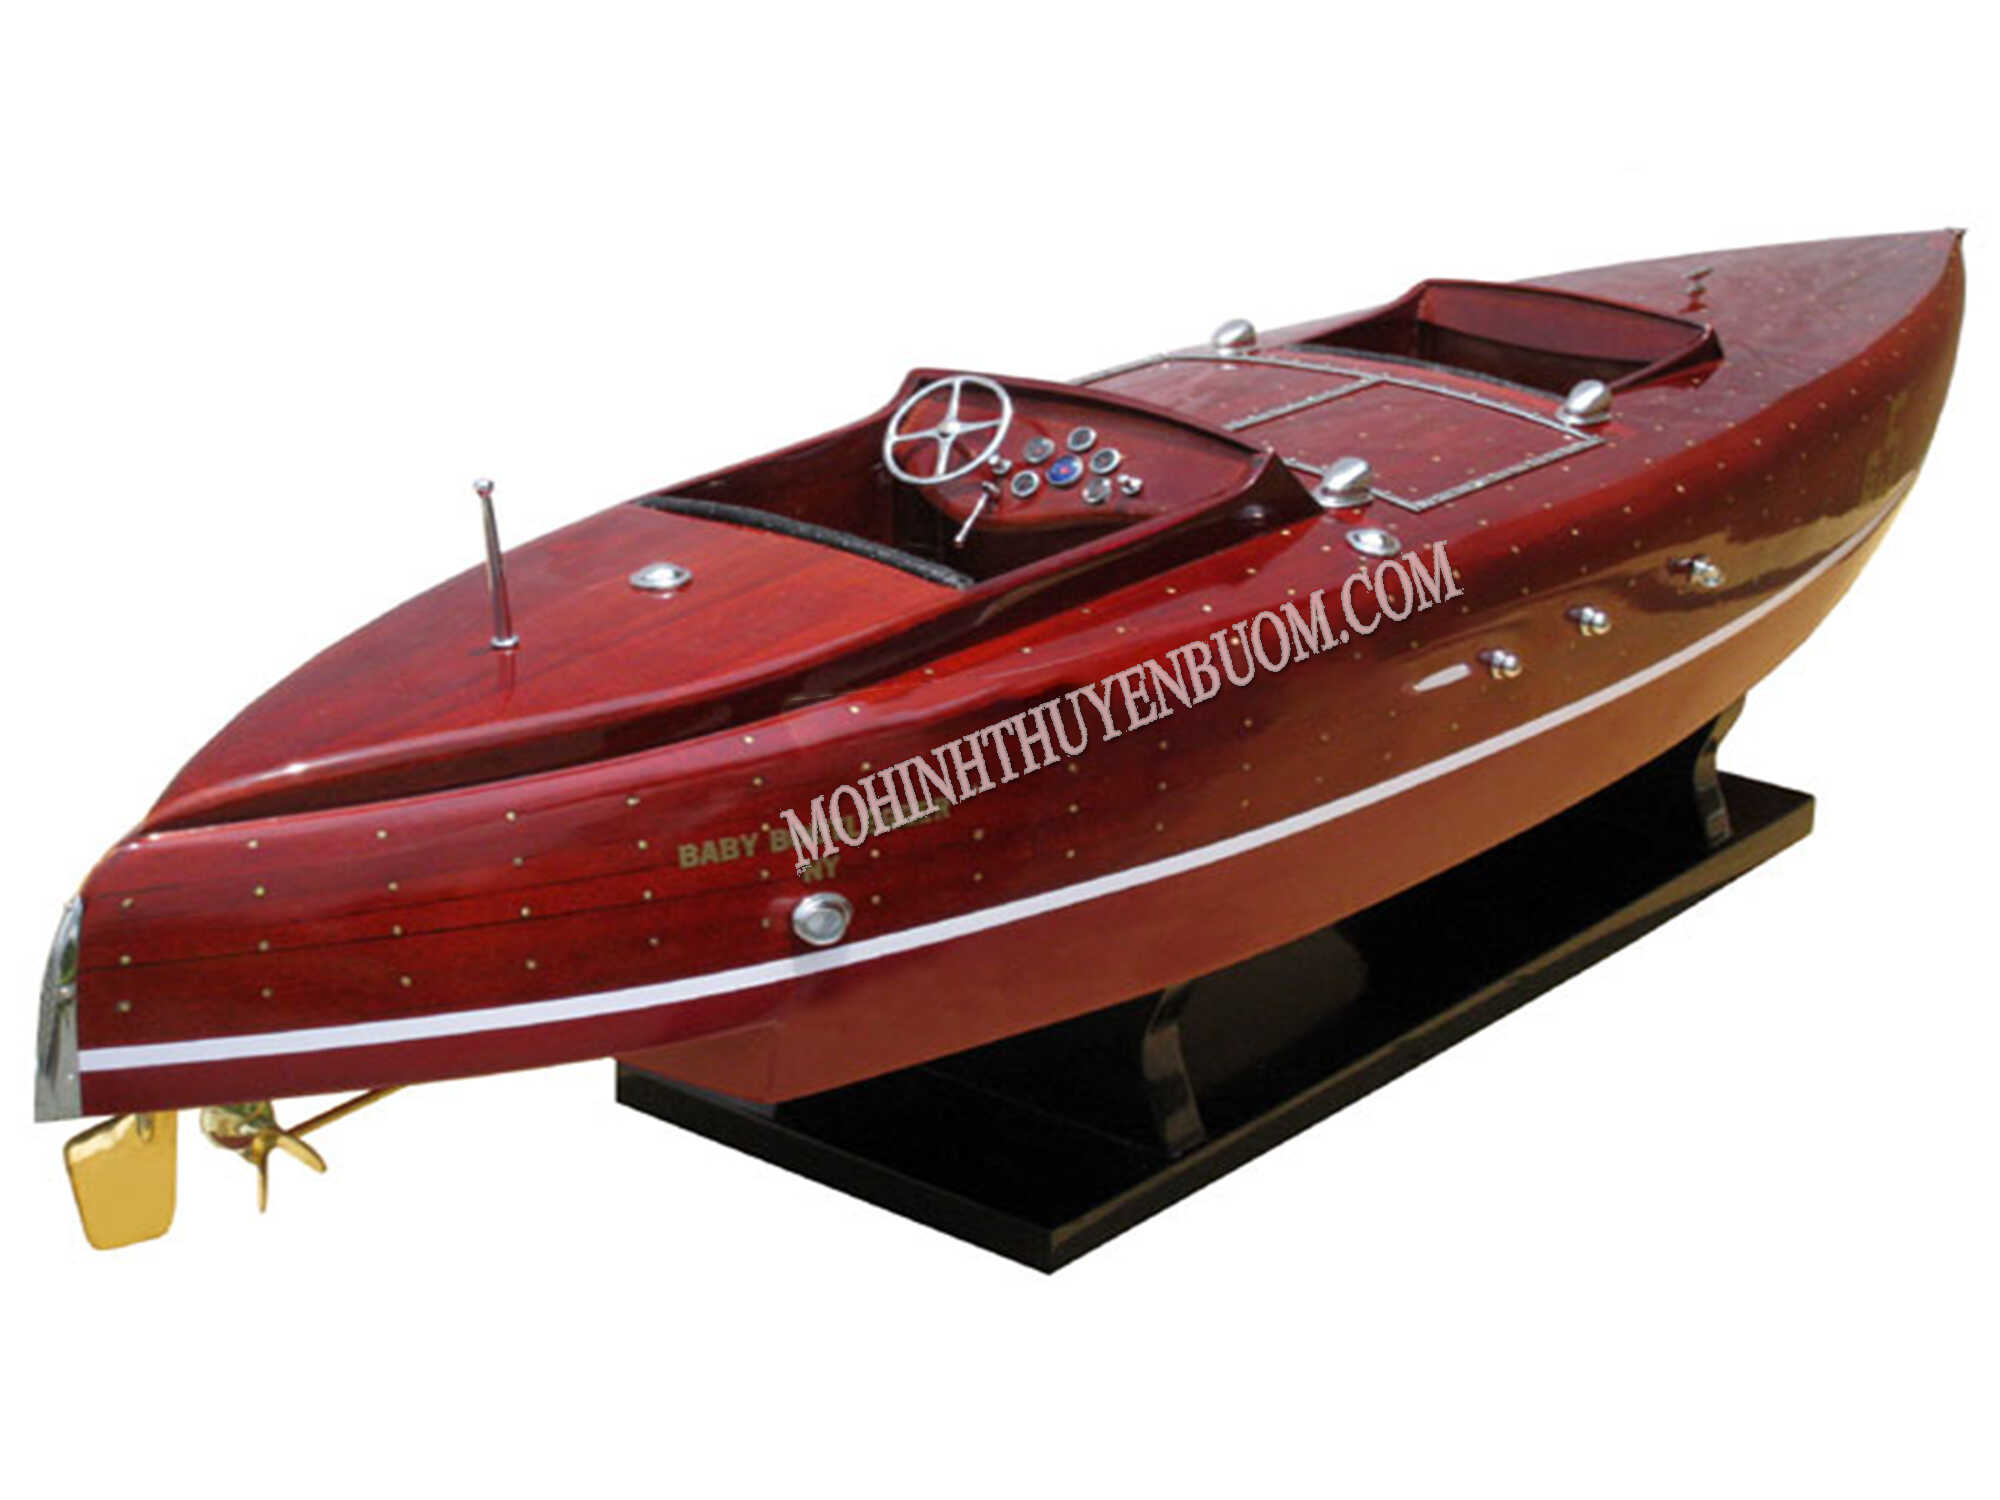 Classic Speed Boat Baby Bootlegger Model Lenght 90